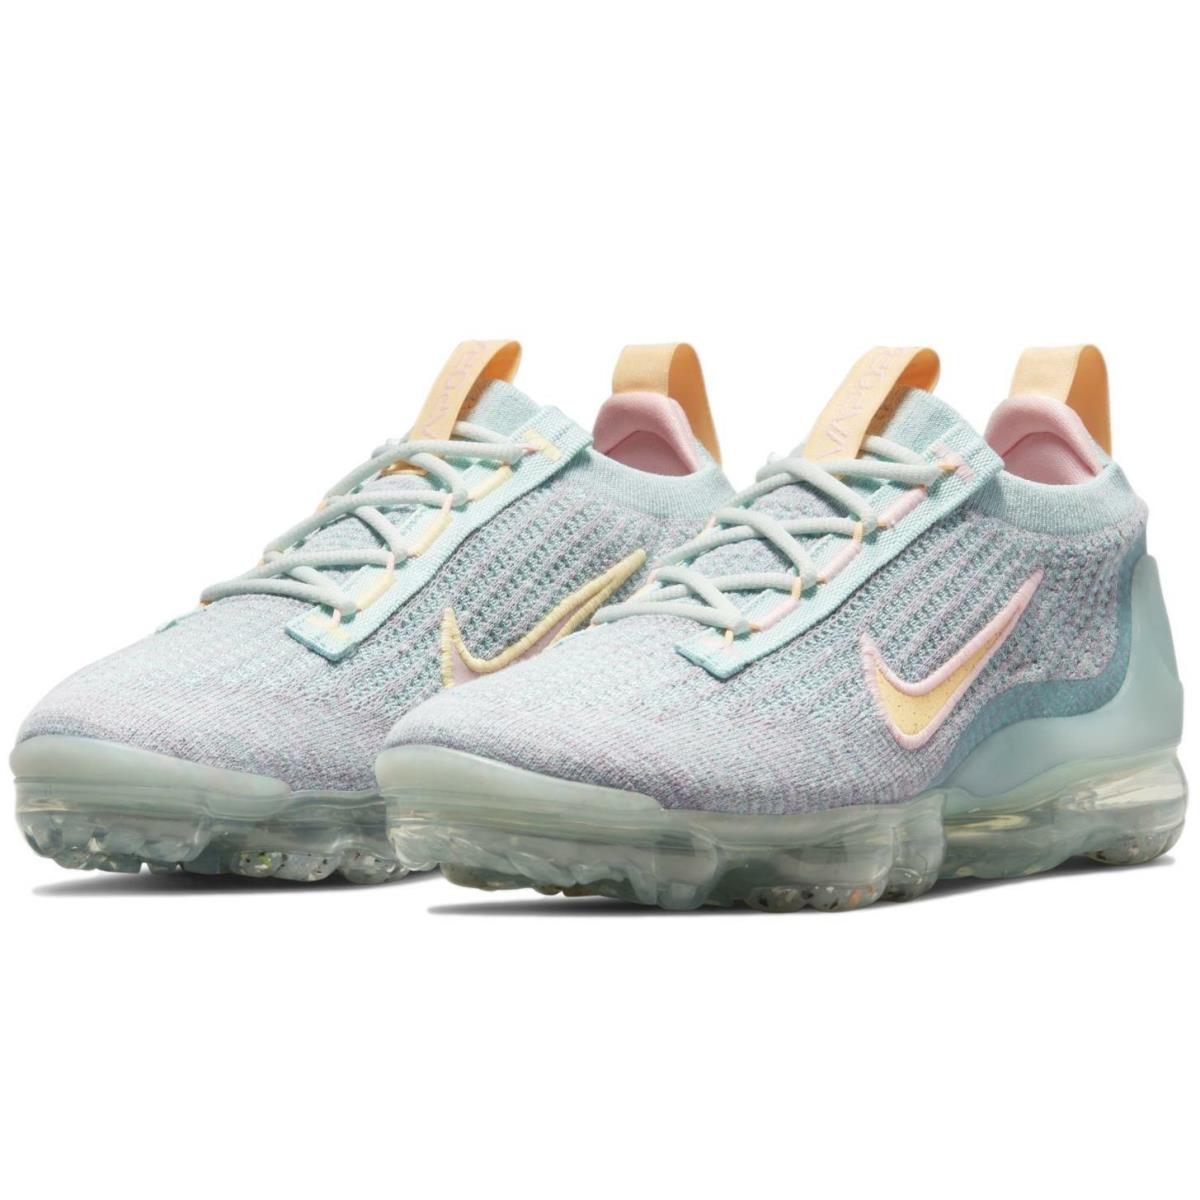 Nike Women`s Air Vapormax 2021 Flyknit `light Dew` Shoes Sneakers DH4088-300 - Light Dew/Melon Tint